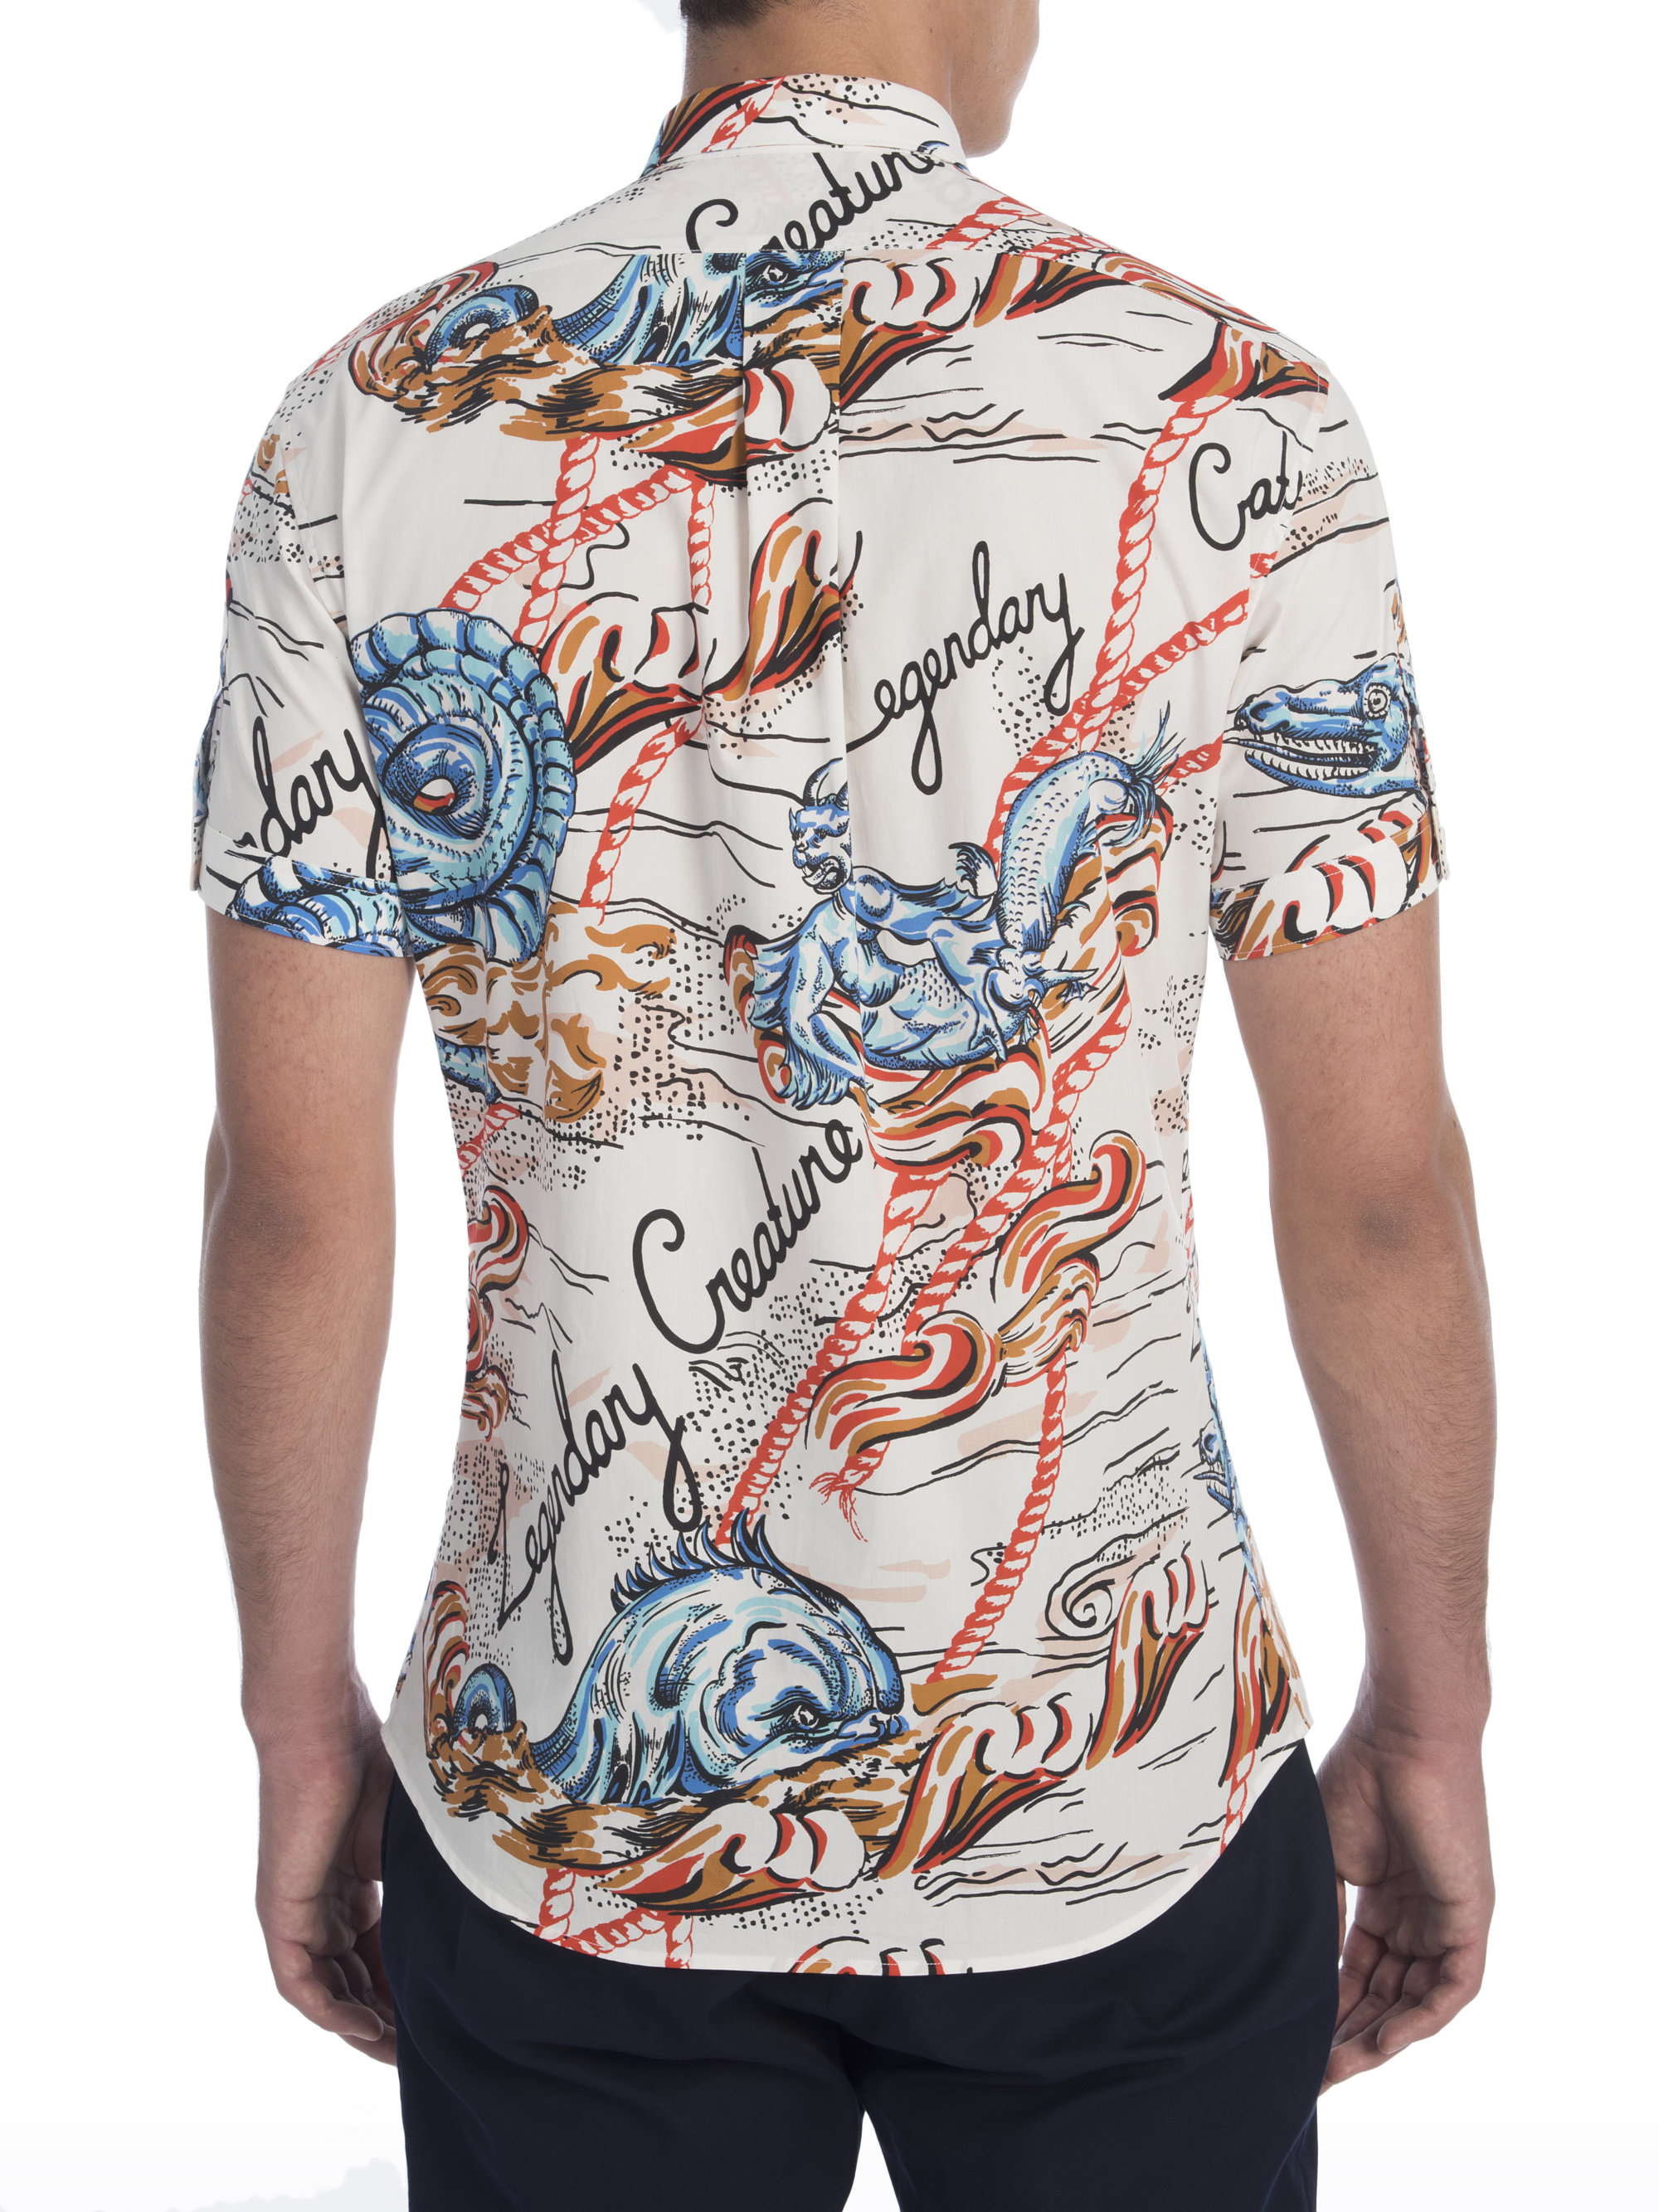 Alexander McQueen Sea Creature Print Shirt in Blue for Men - Lyst